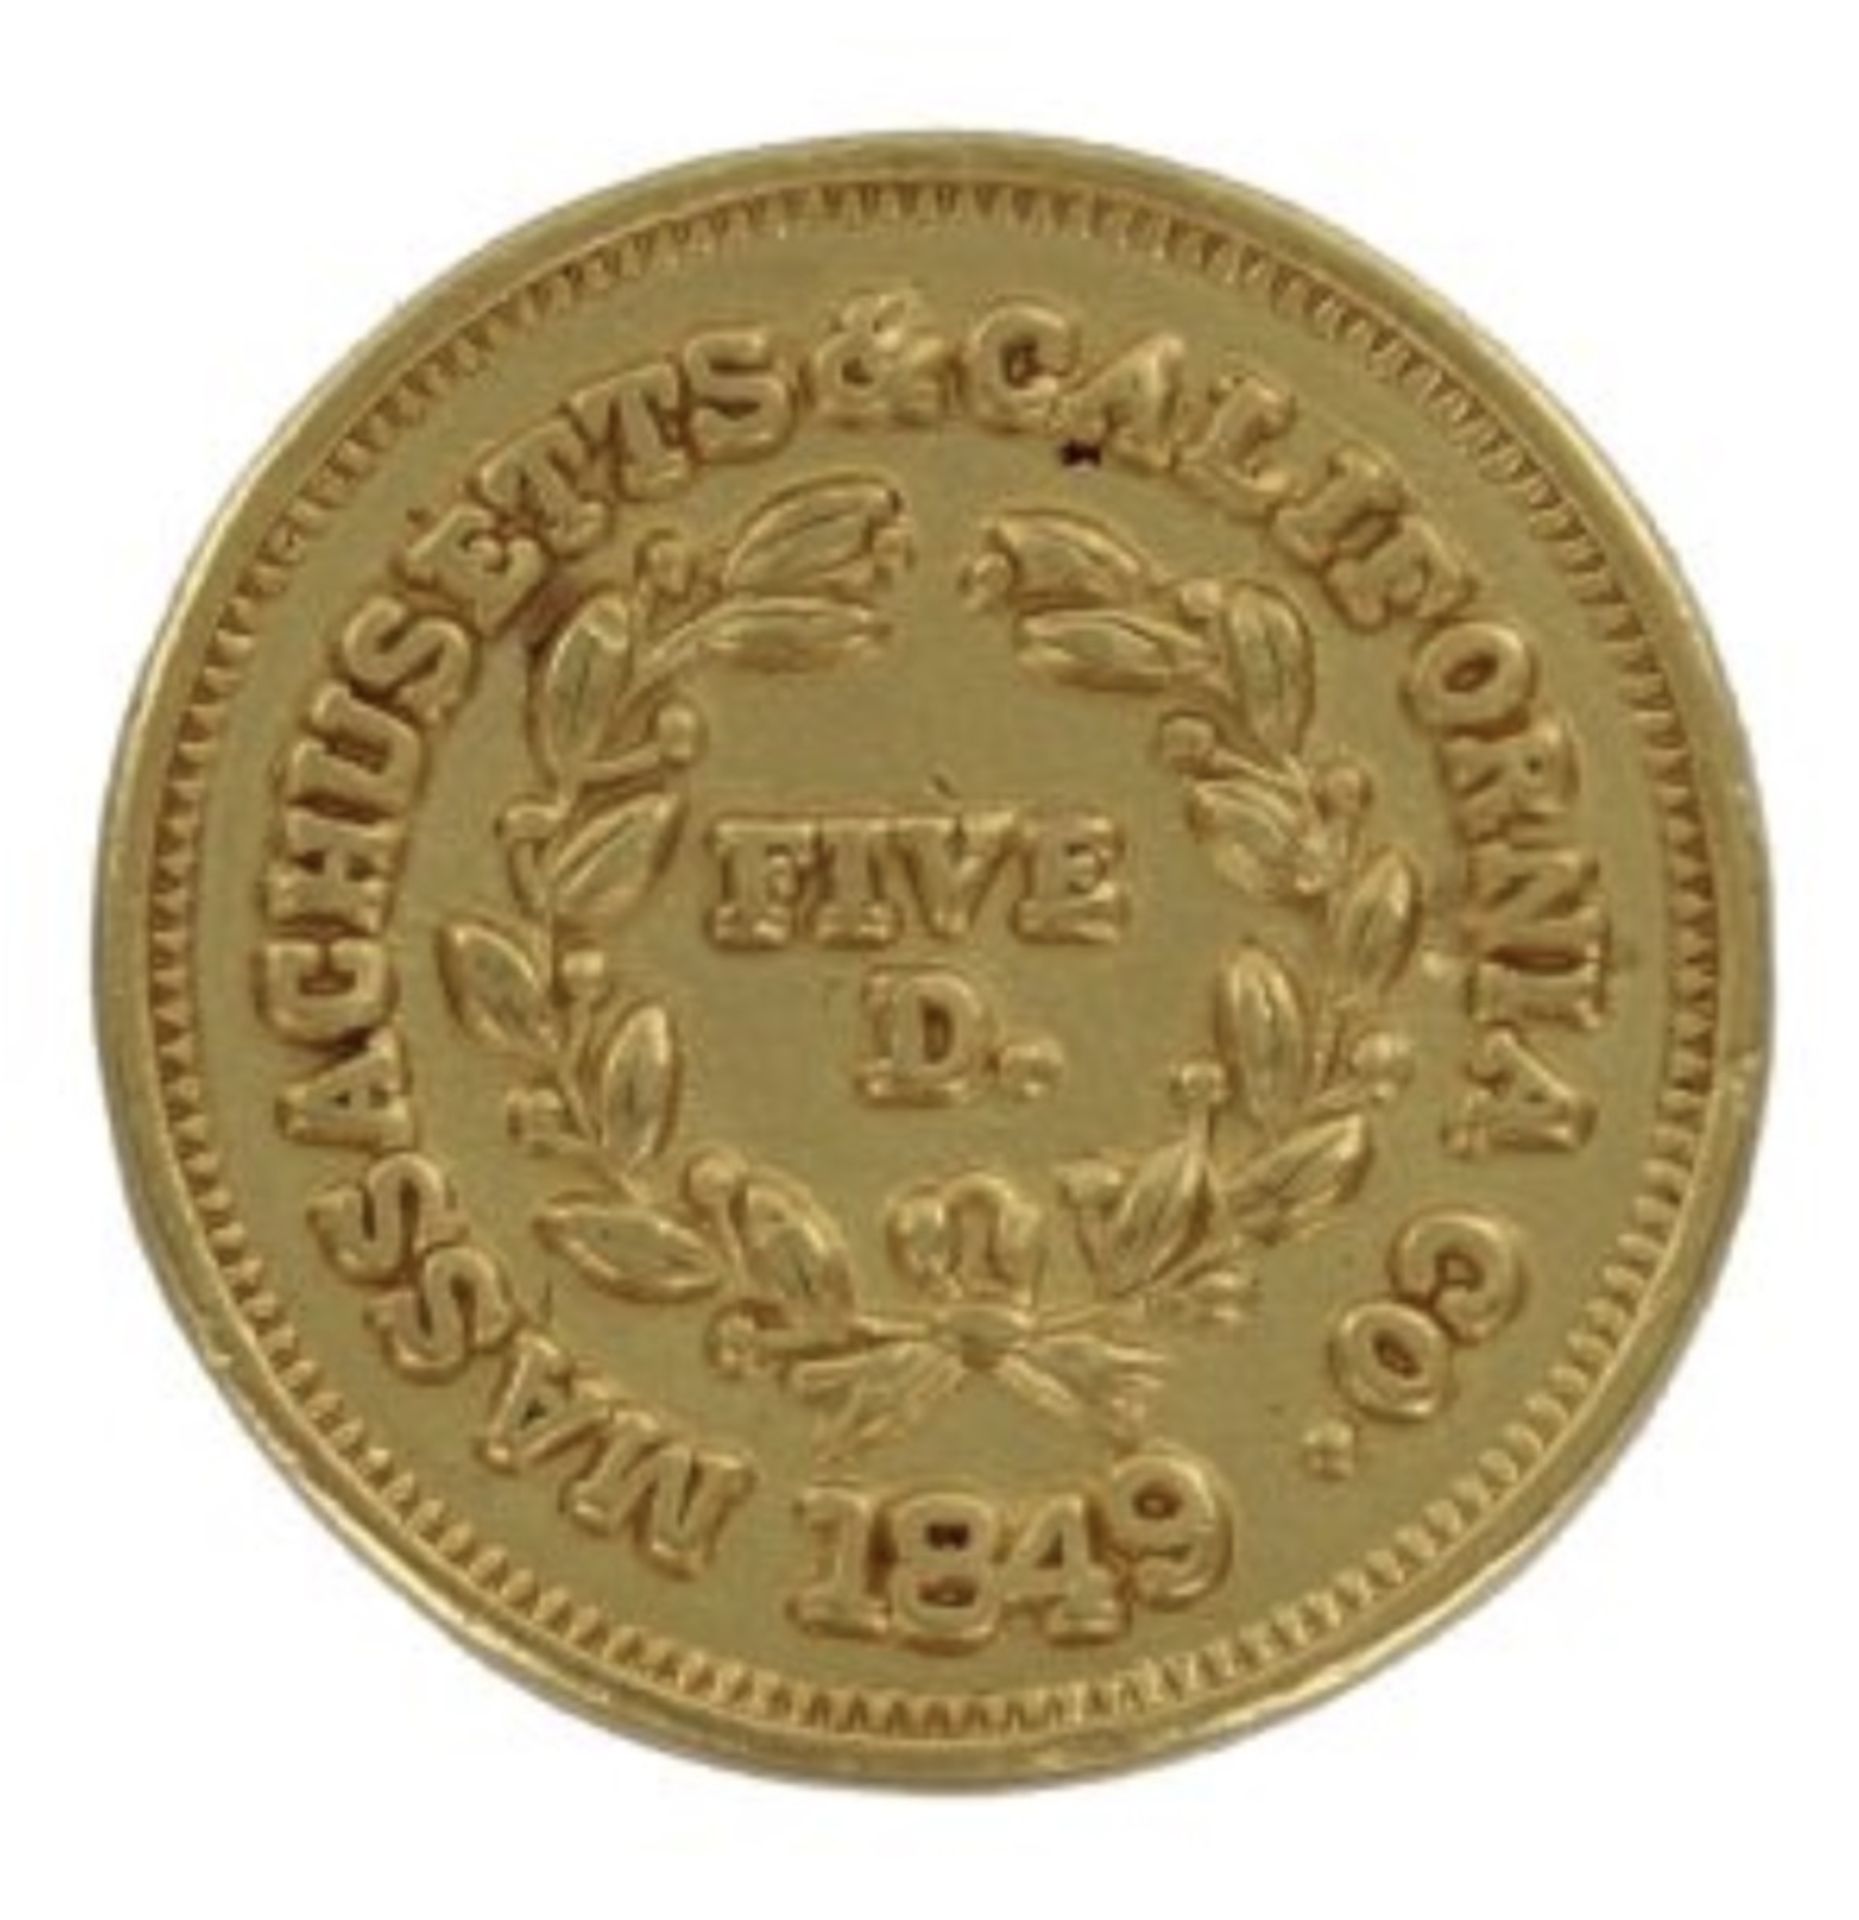 Massachusetts, California Company Five Dollar Gold Piece Coin - Image 2 of 2